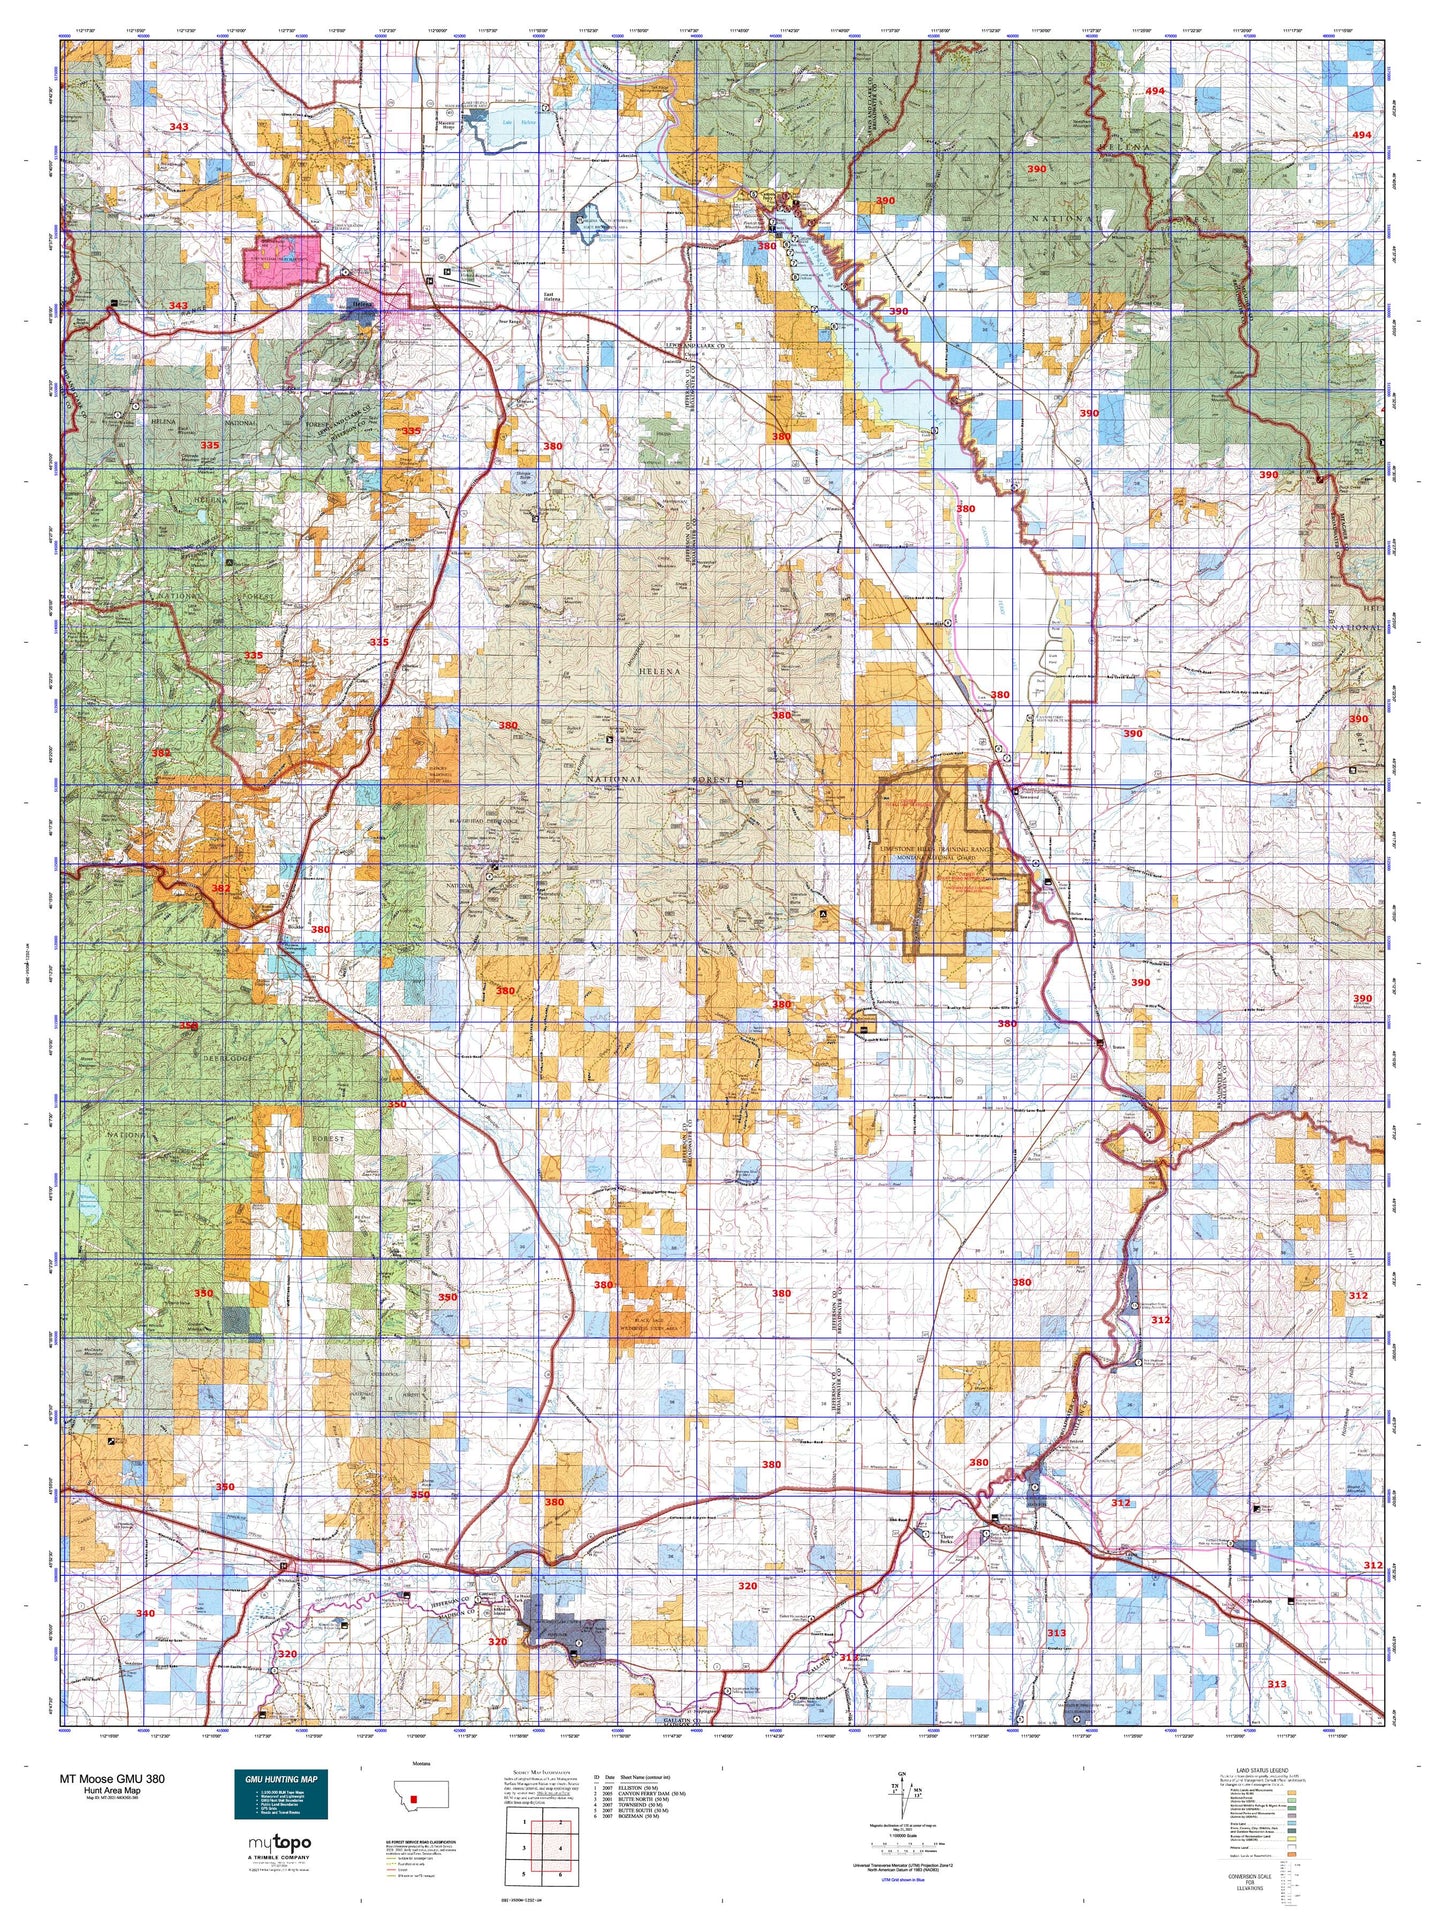 Montana Moose GMU 380 Map Image